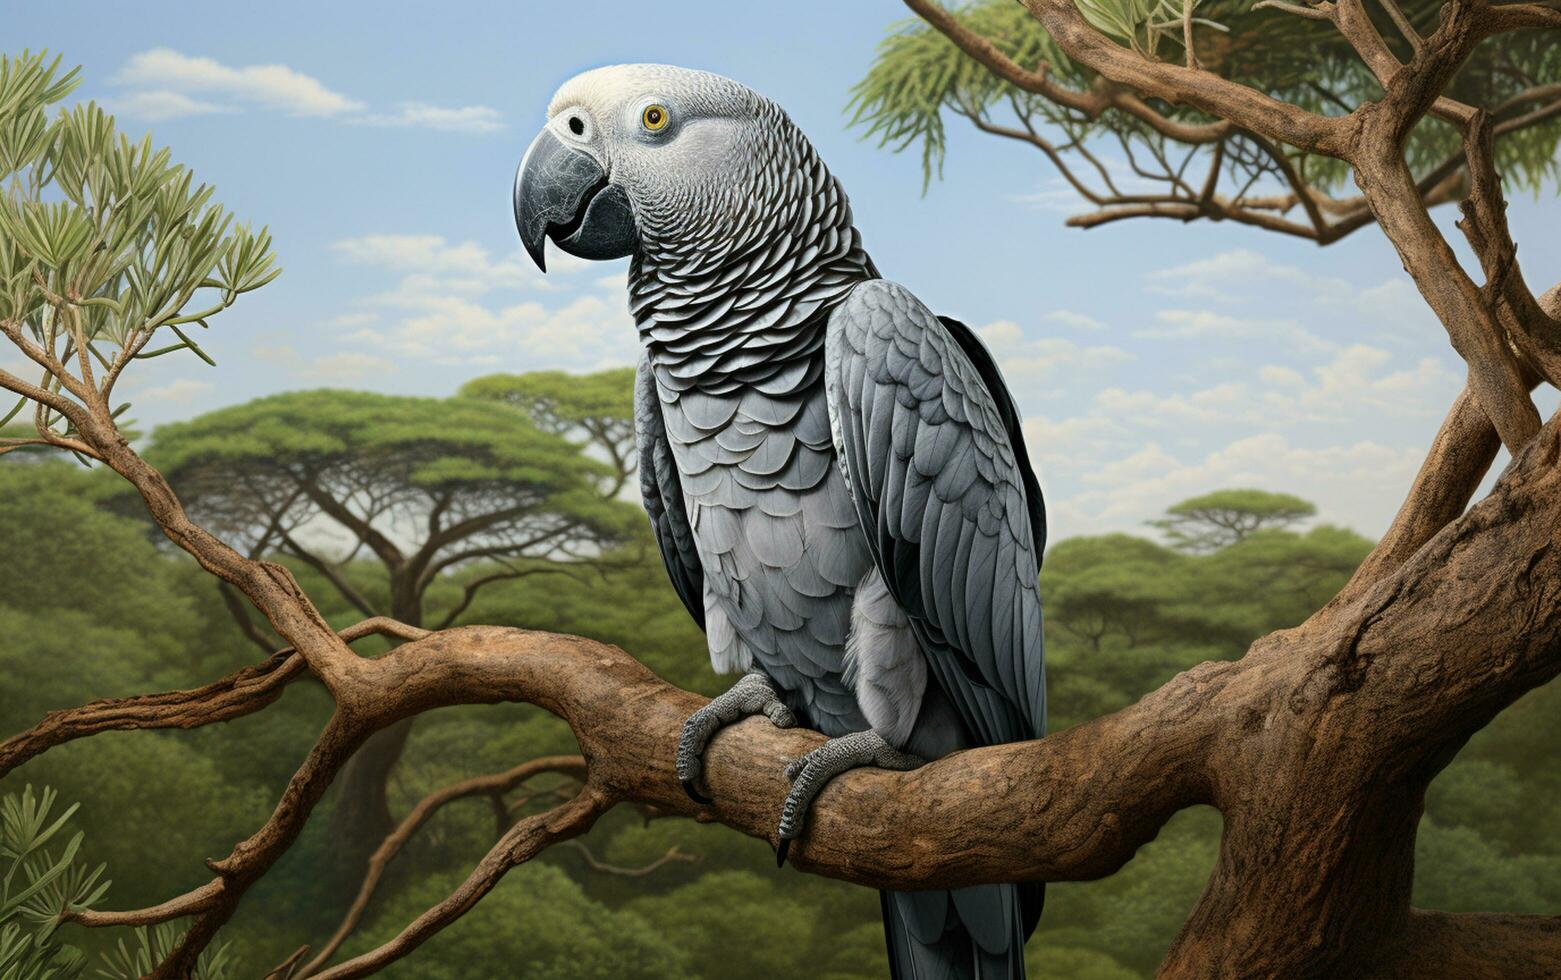 ai gegenereerd Afrikaanse grijs papegaai foto